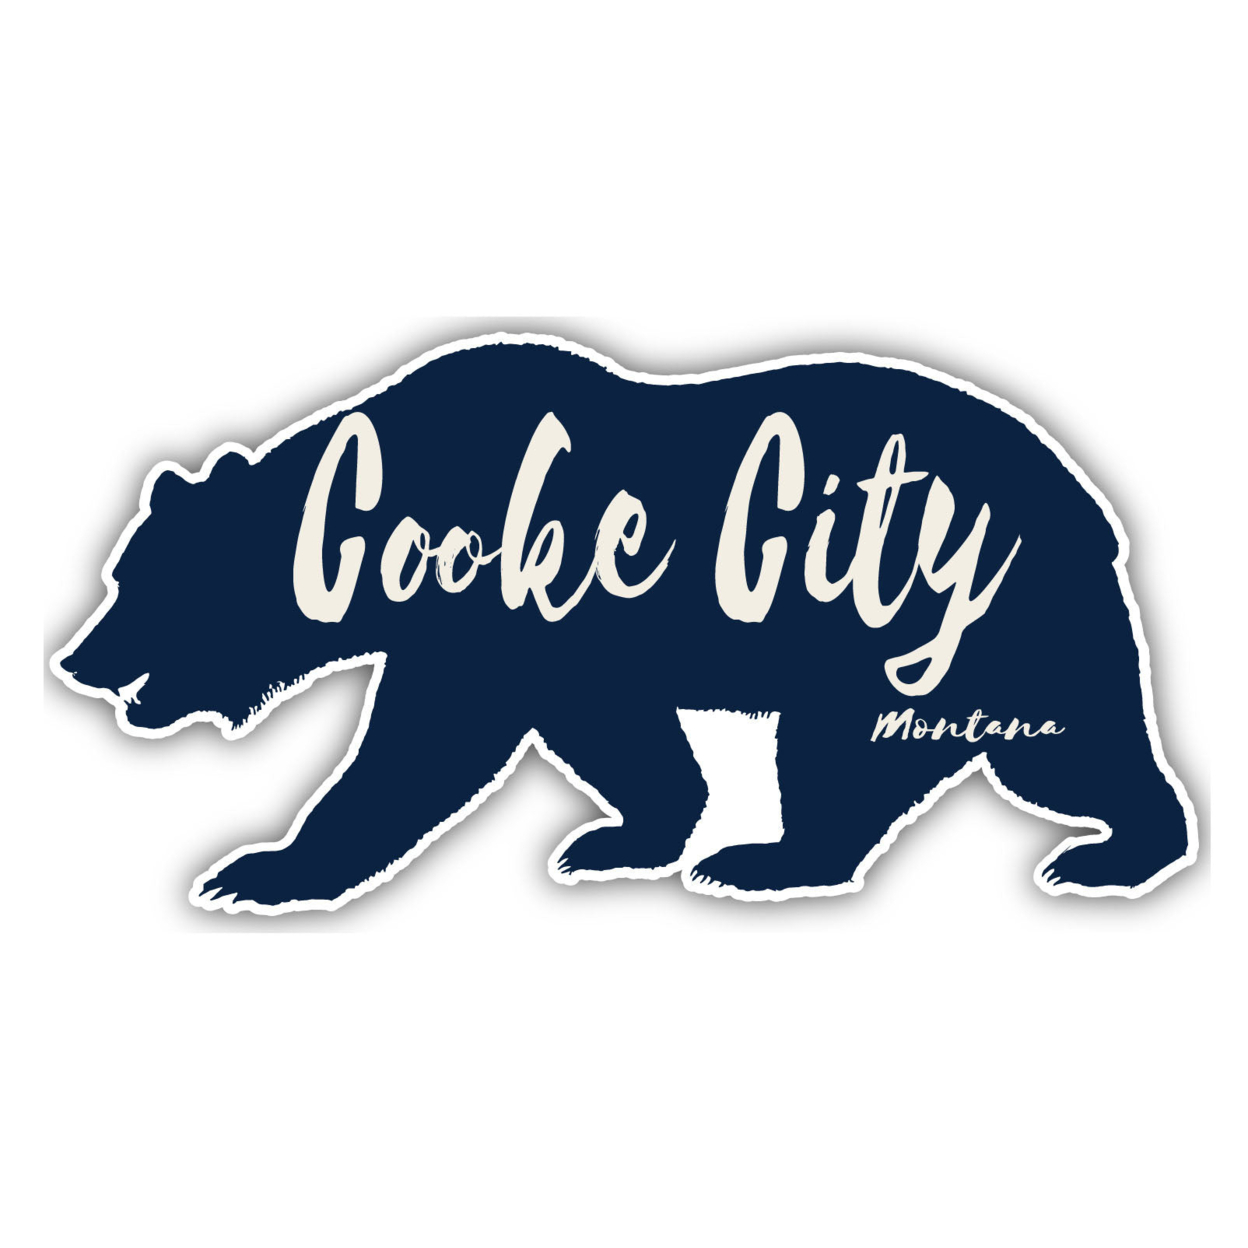 Cooke City Montana Souvenir Decorative Stickers (Choose Theme And Size) - Single Unit, 10-Inch, Bear